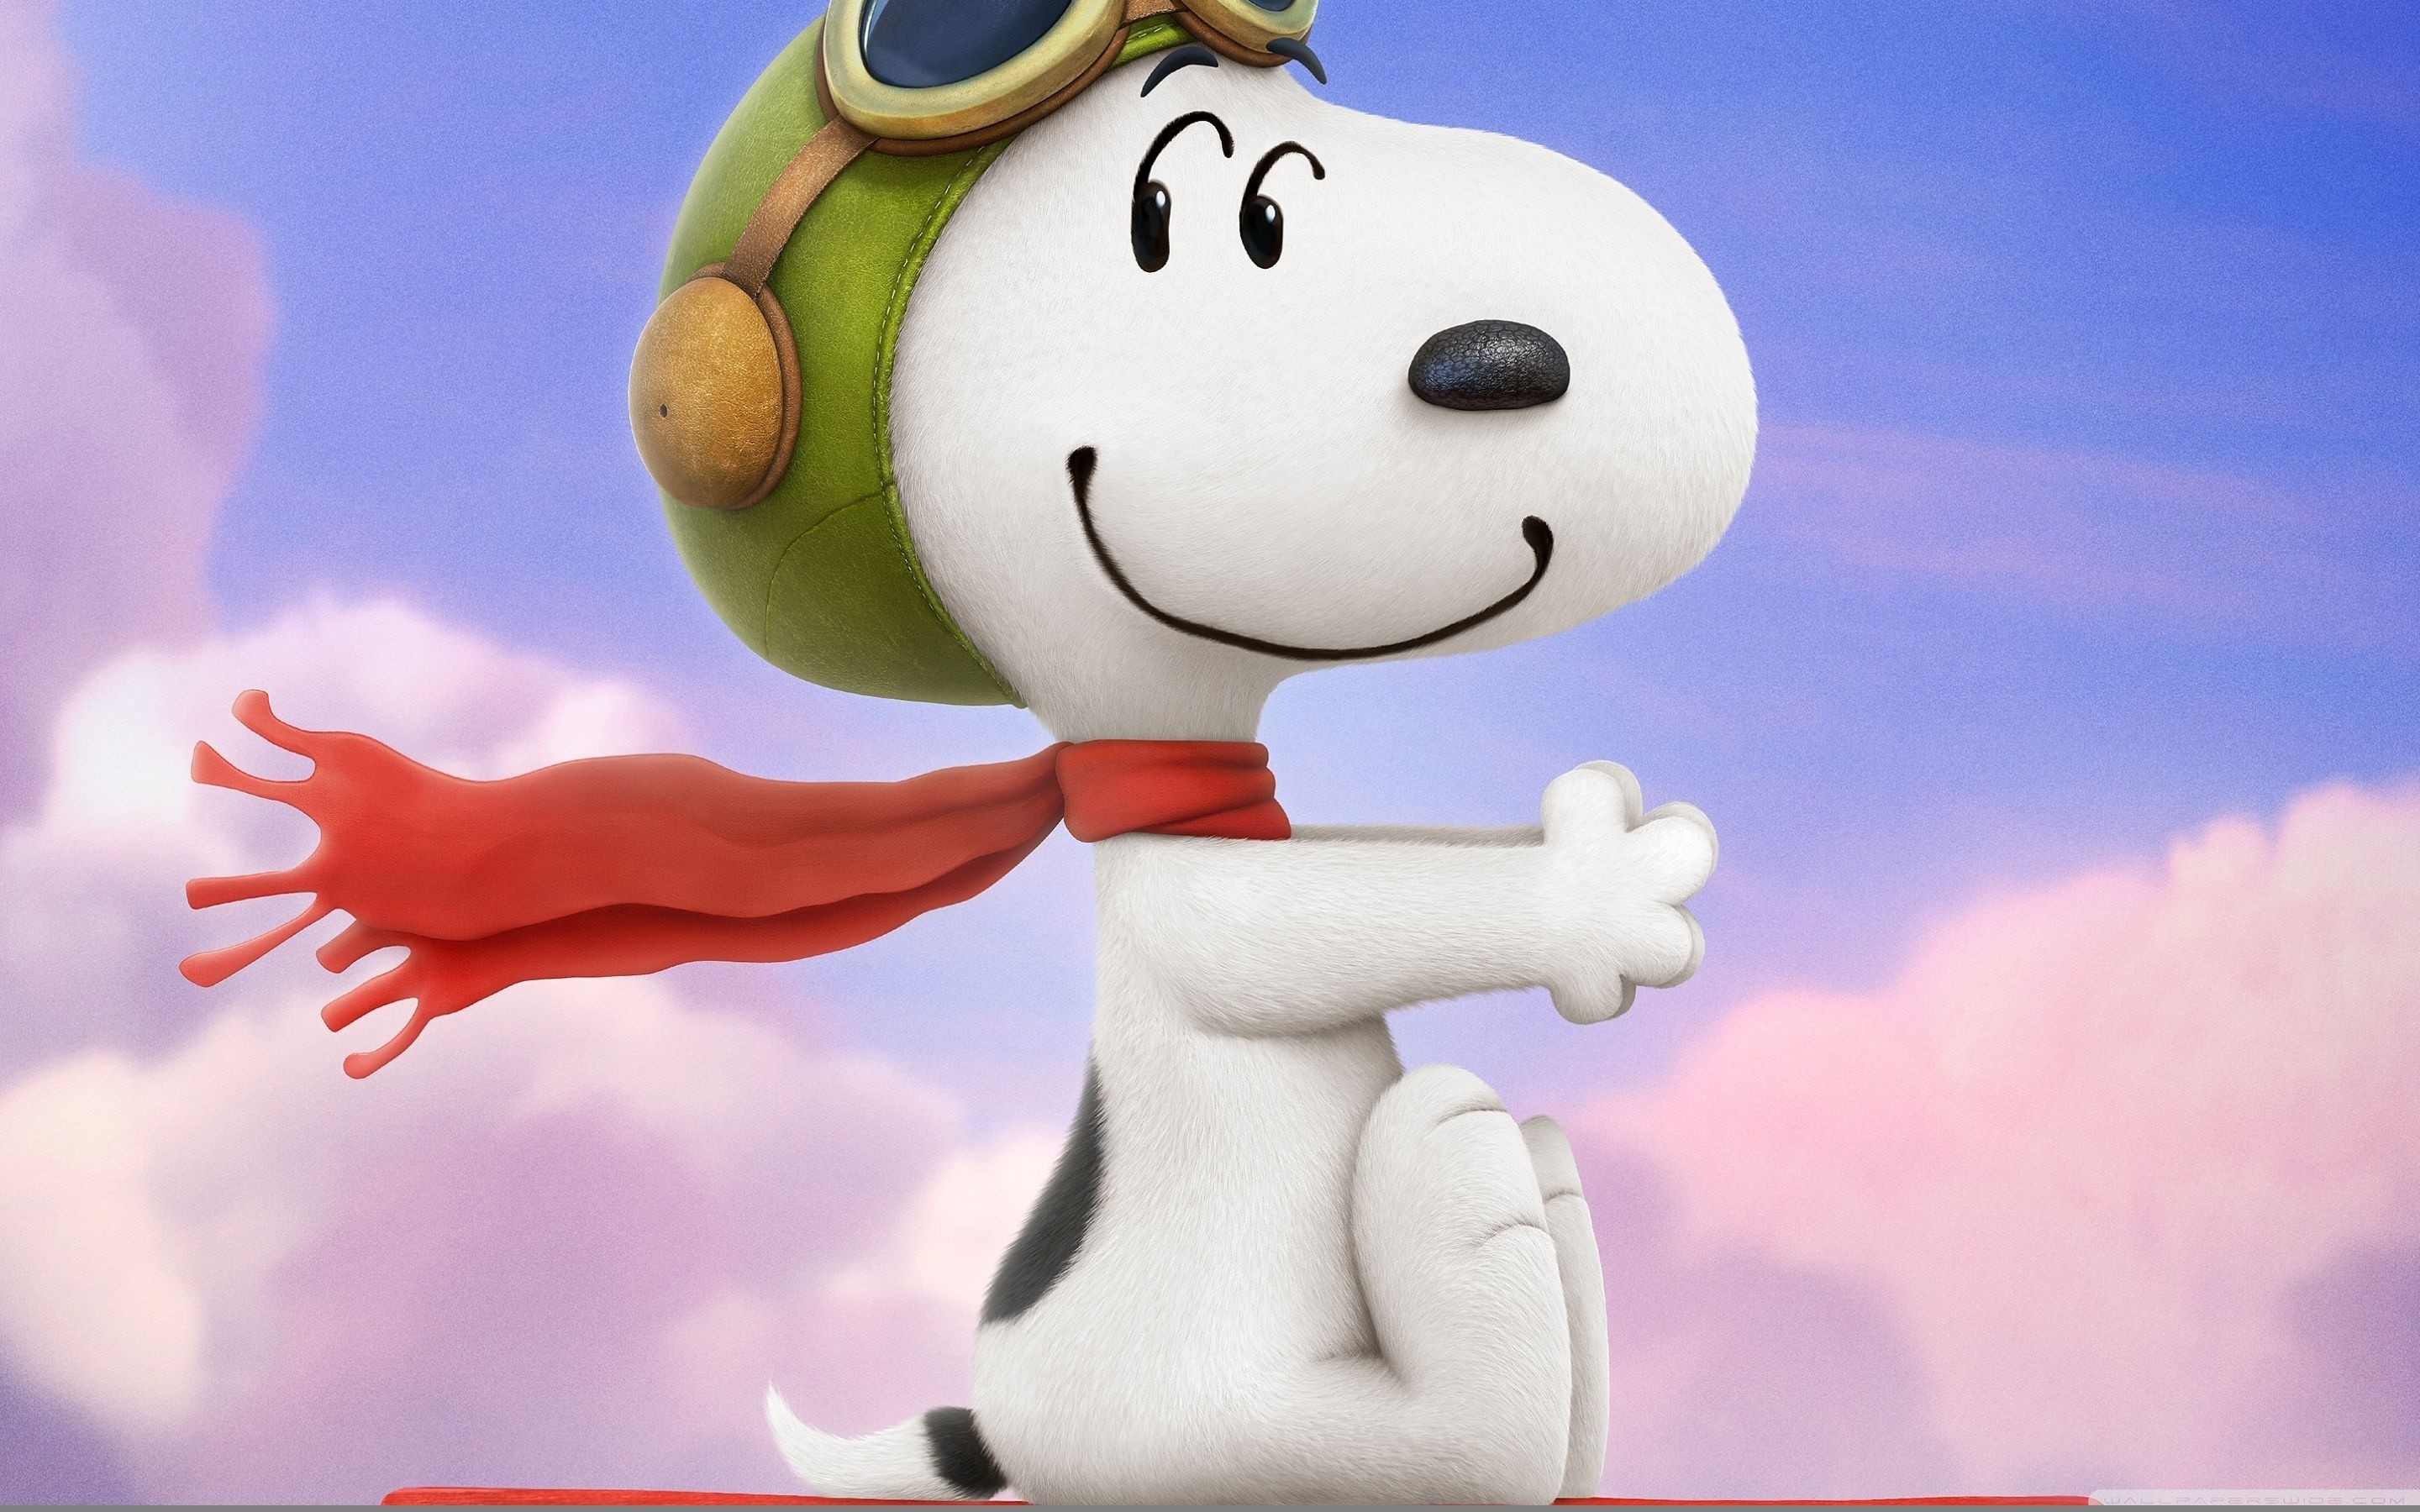 Snoopy 4K wallpaper for your desktop